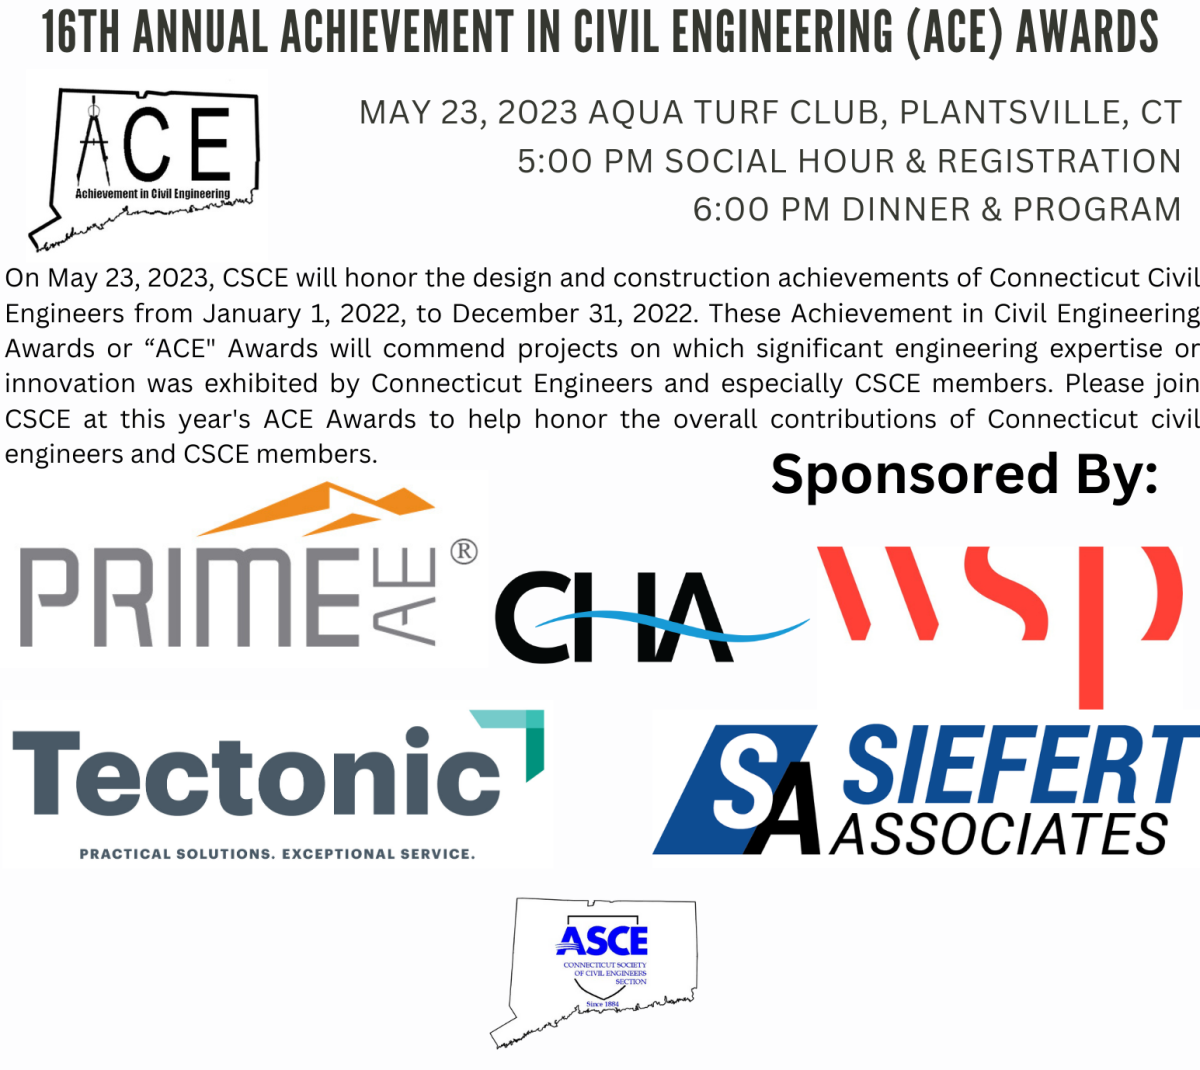 ACE Awards sponsors